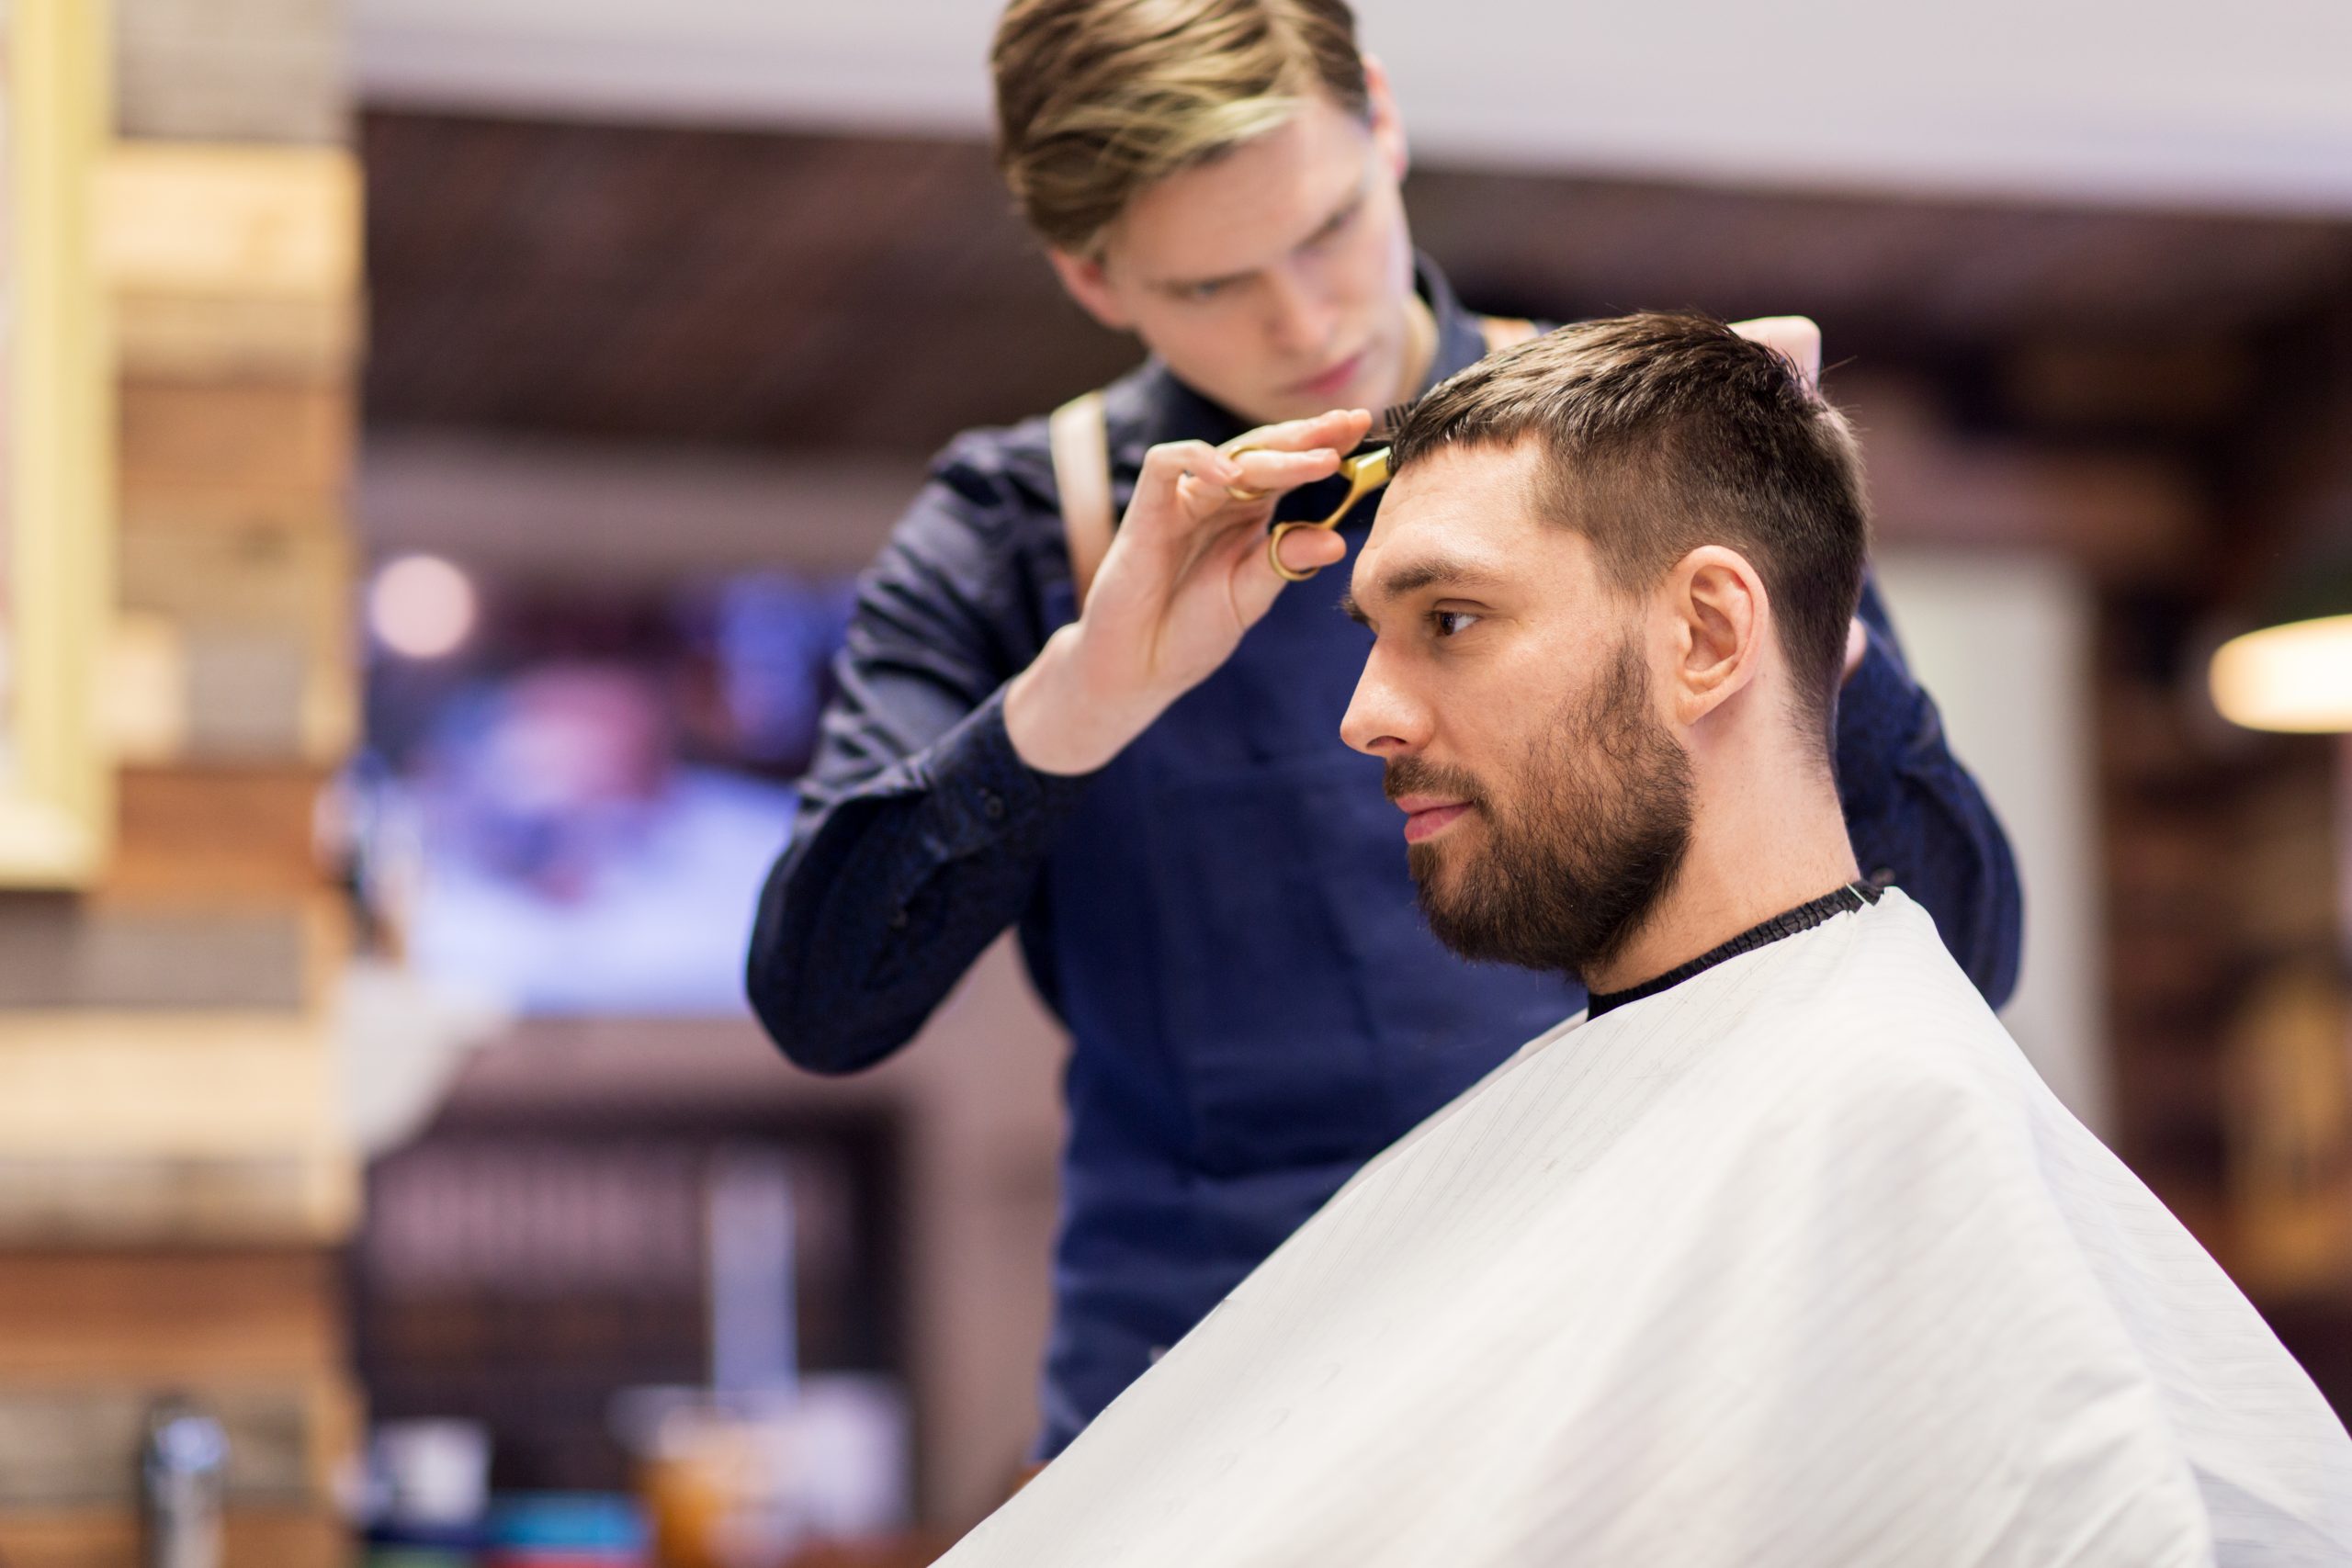 man and barber cutting hair at barbershop